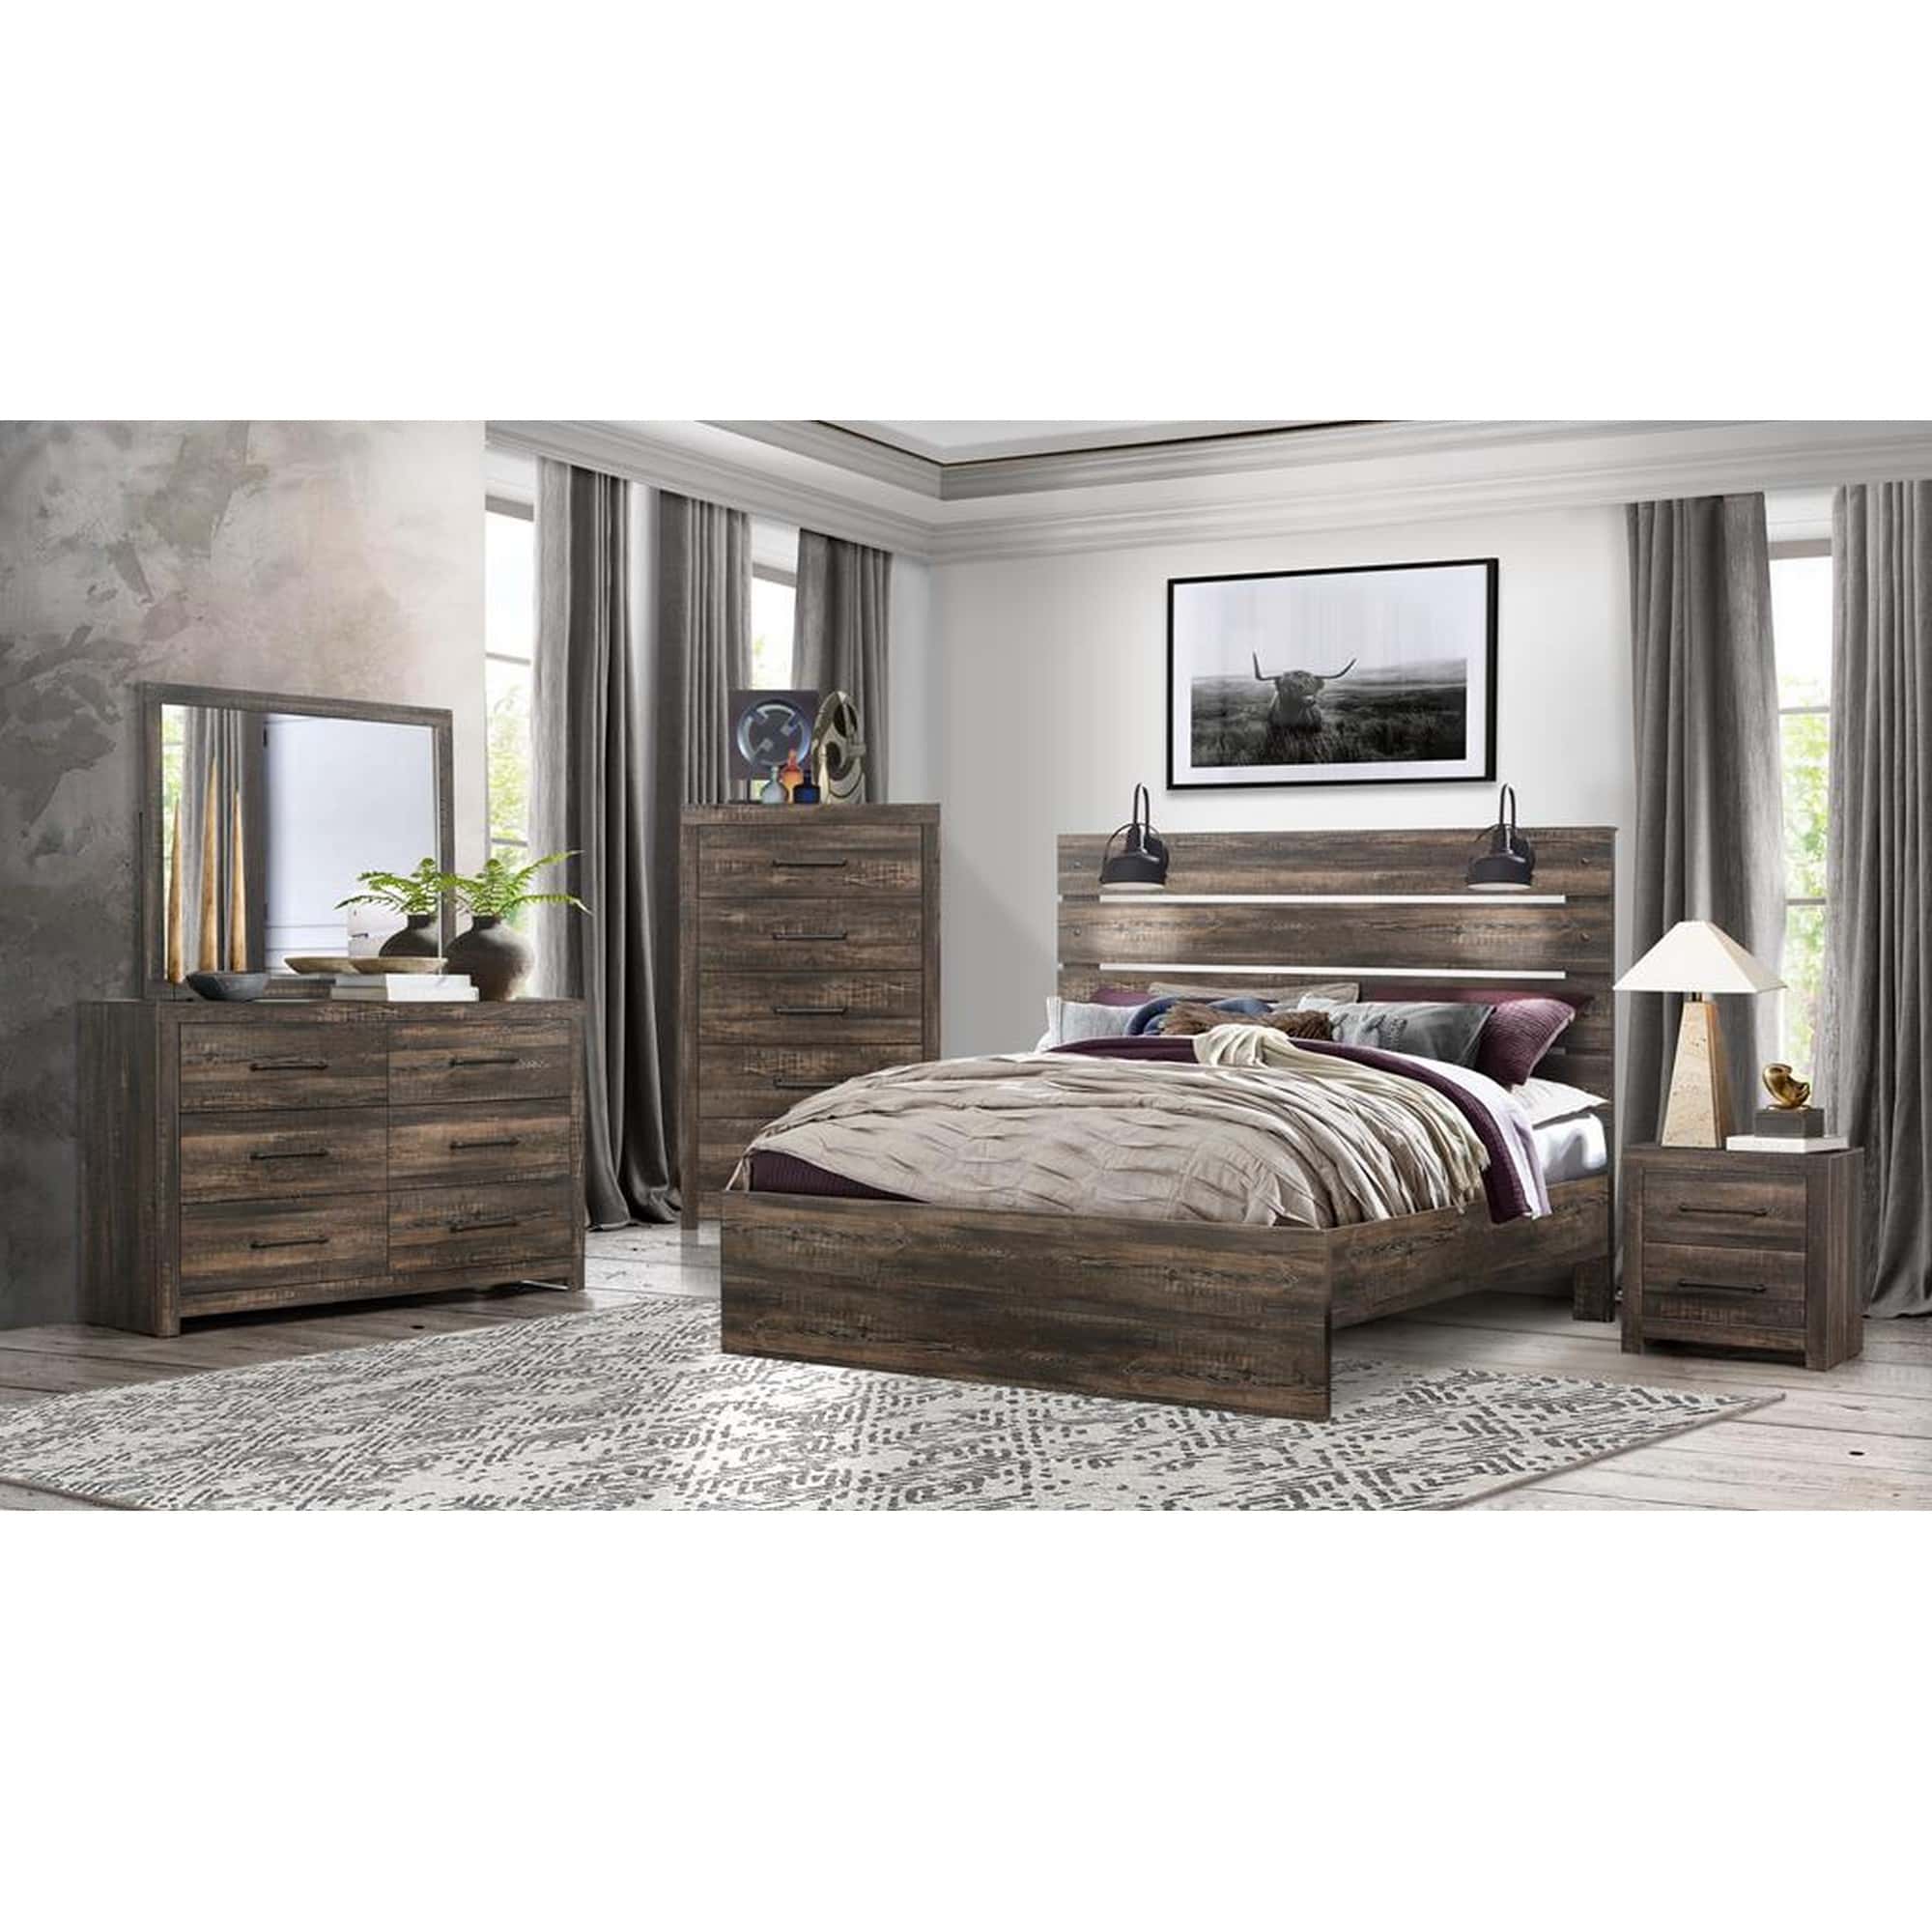 Linwood Dark Oak Bedroom Set by Global Furniture